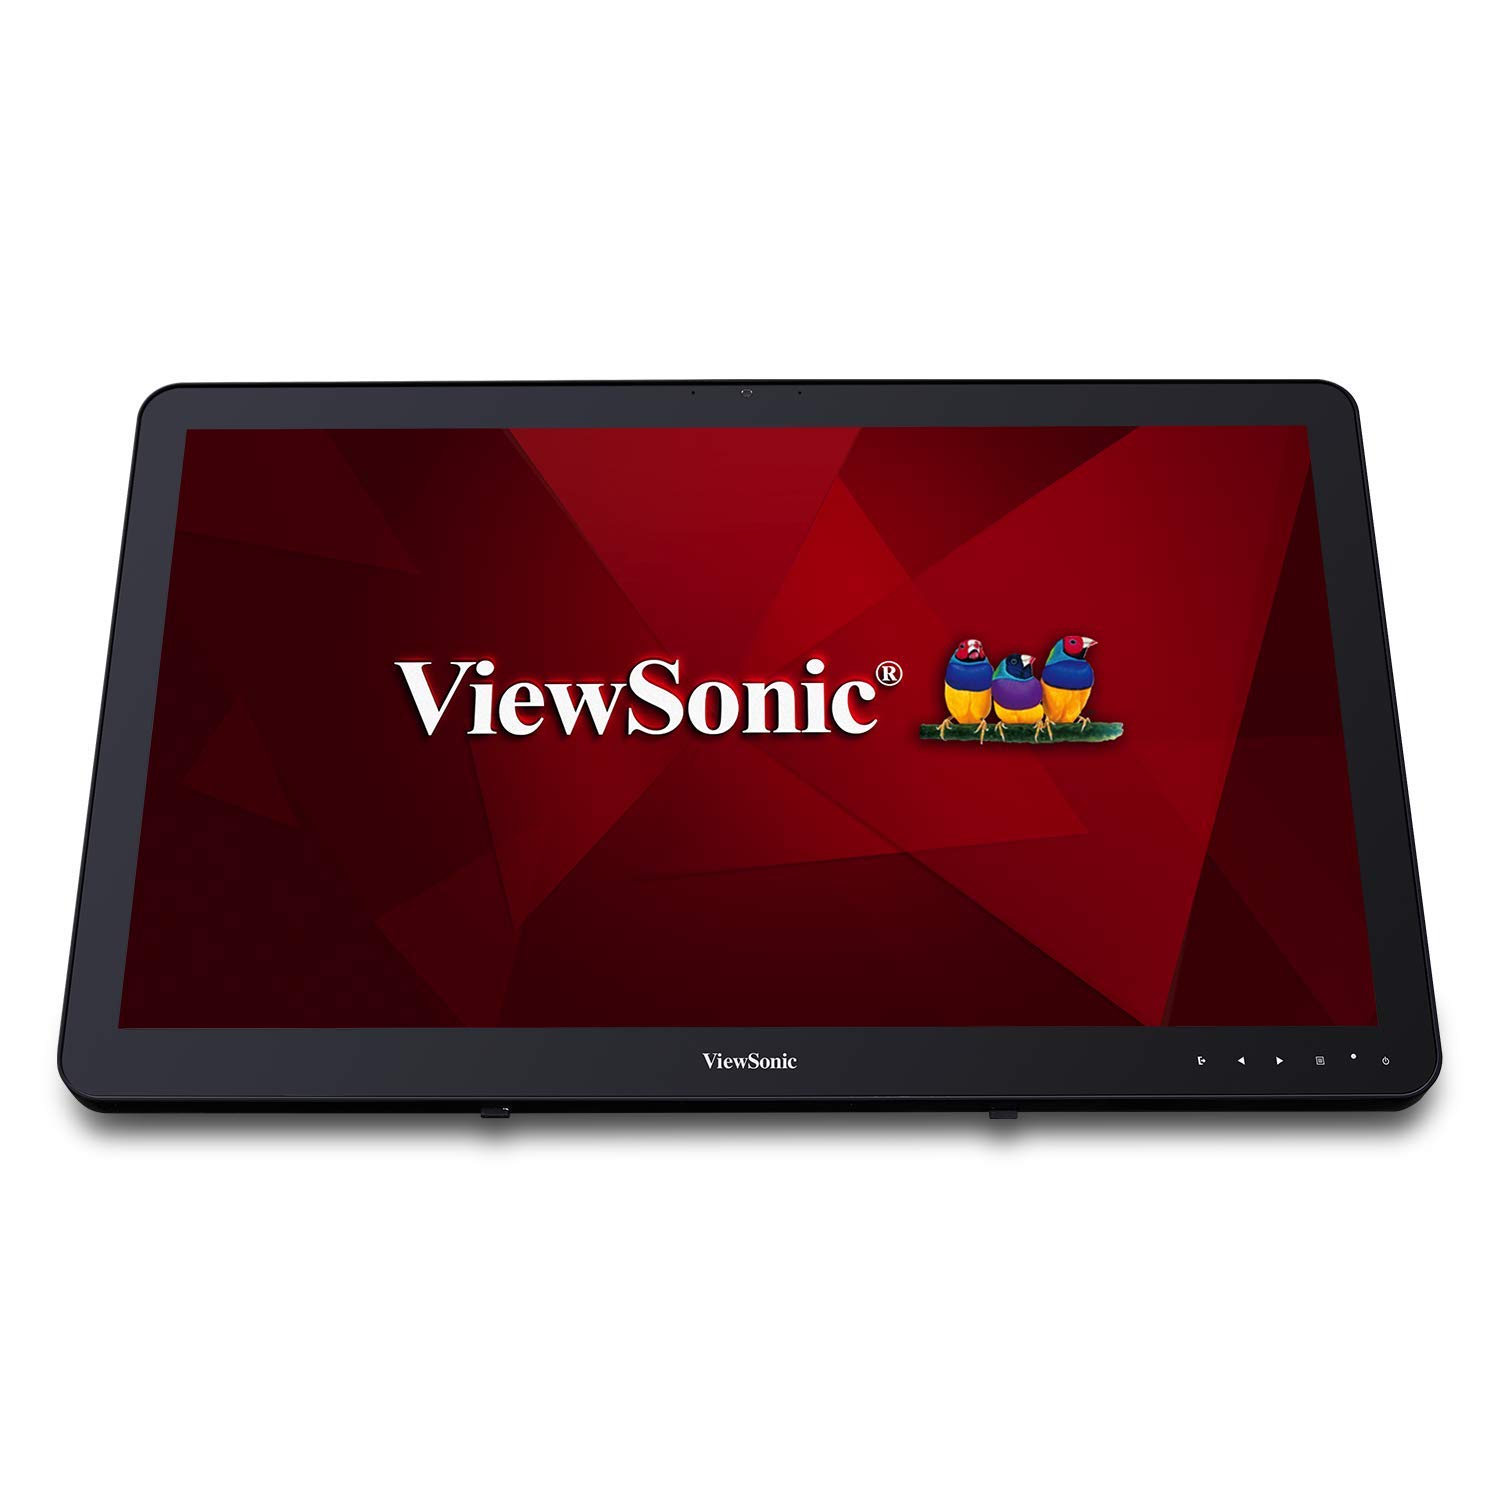 Viewsonic VSD243-BKA-US0 24 polegadas 1080p 10-Point Touch Smart Digital Display com Bluetooth Dual Band Wi-Fi e Android Oreo 8.1 OS